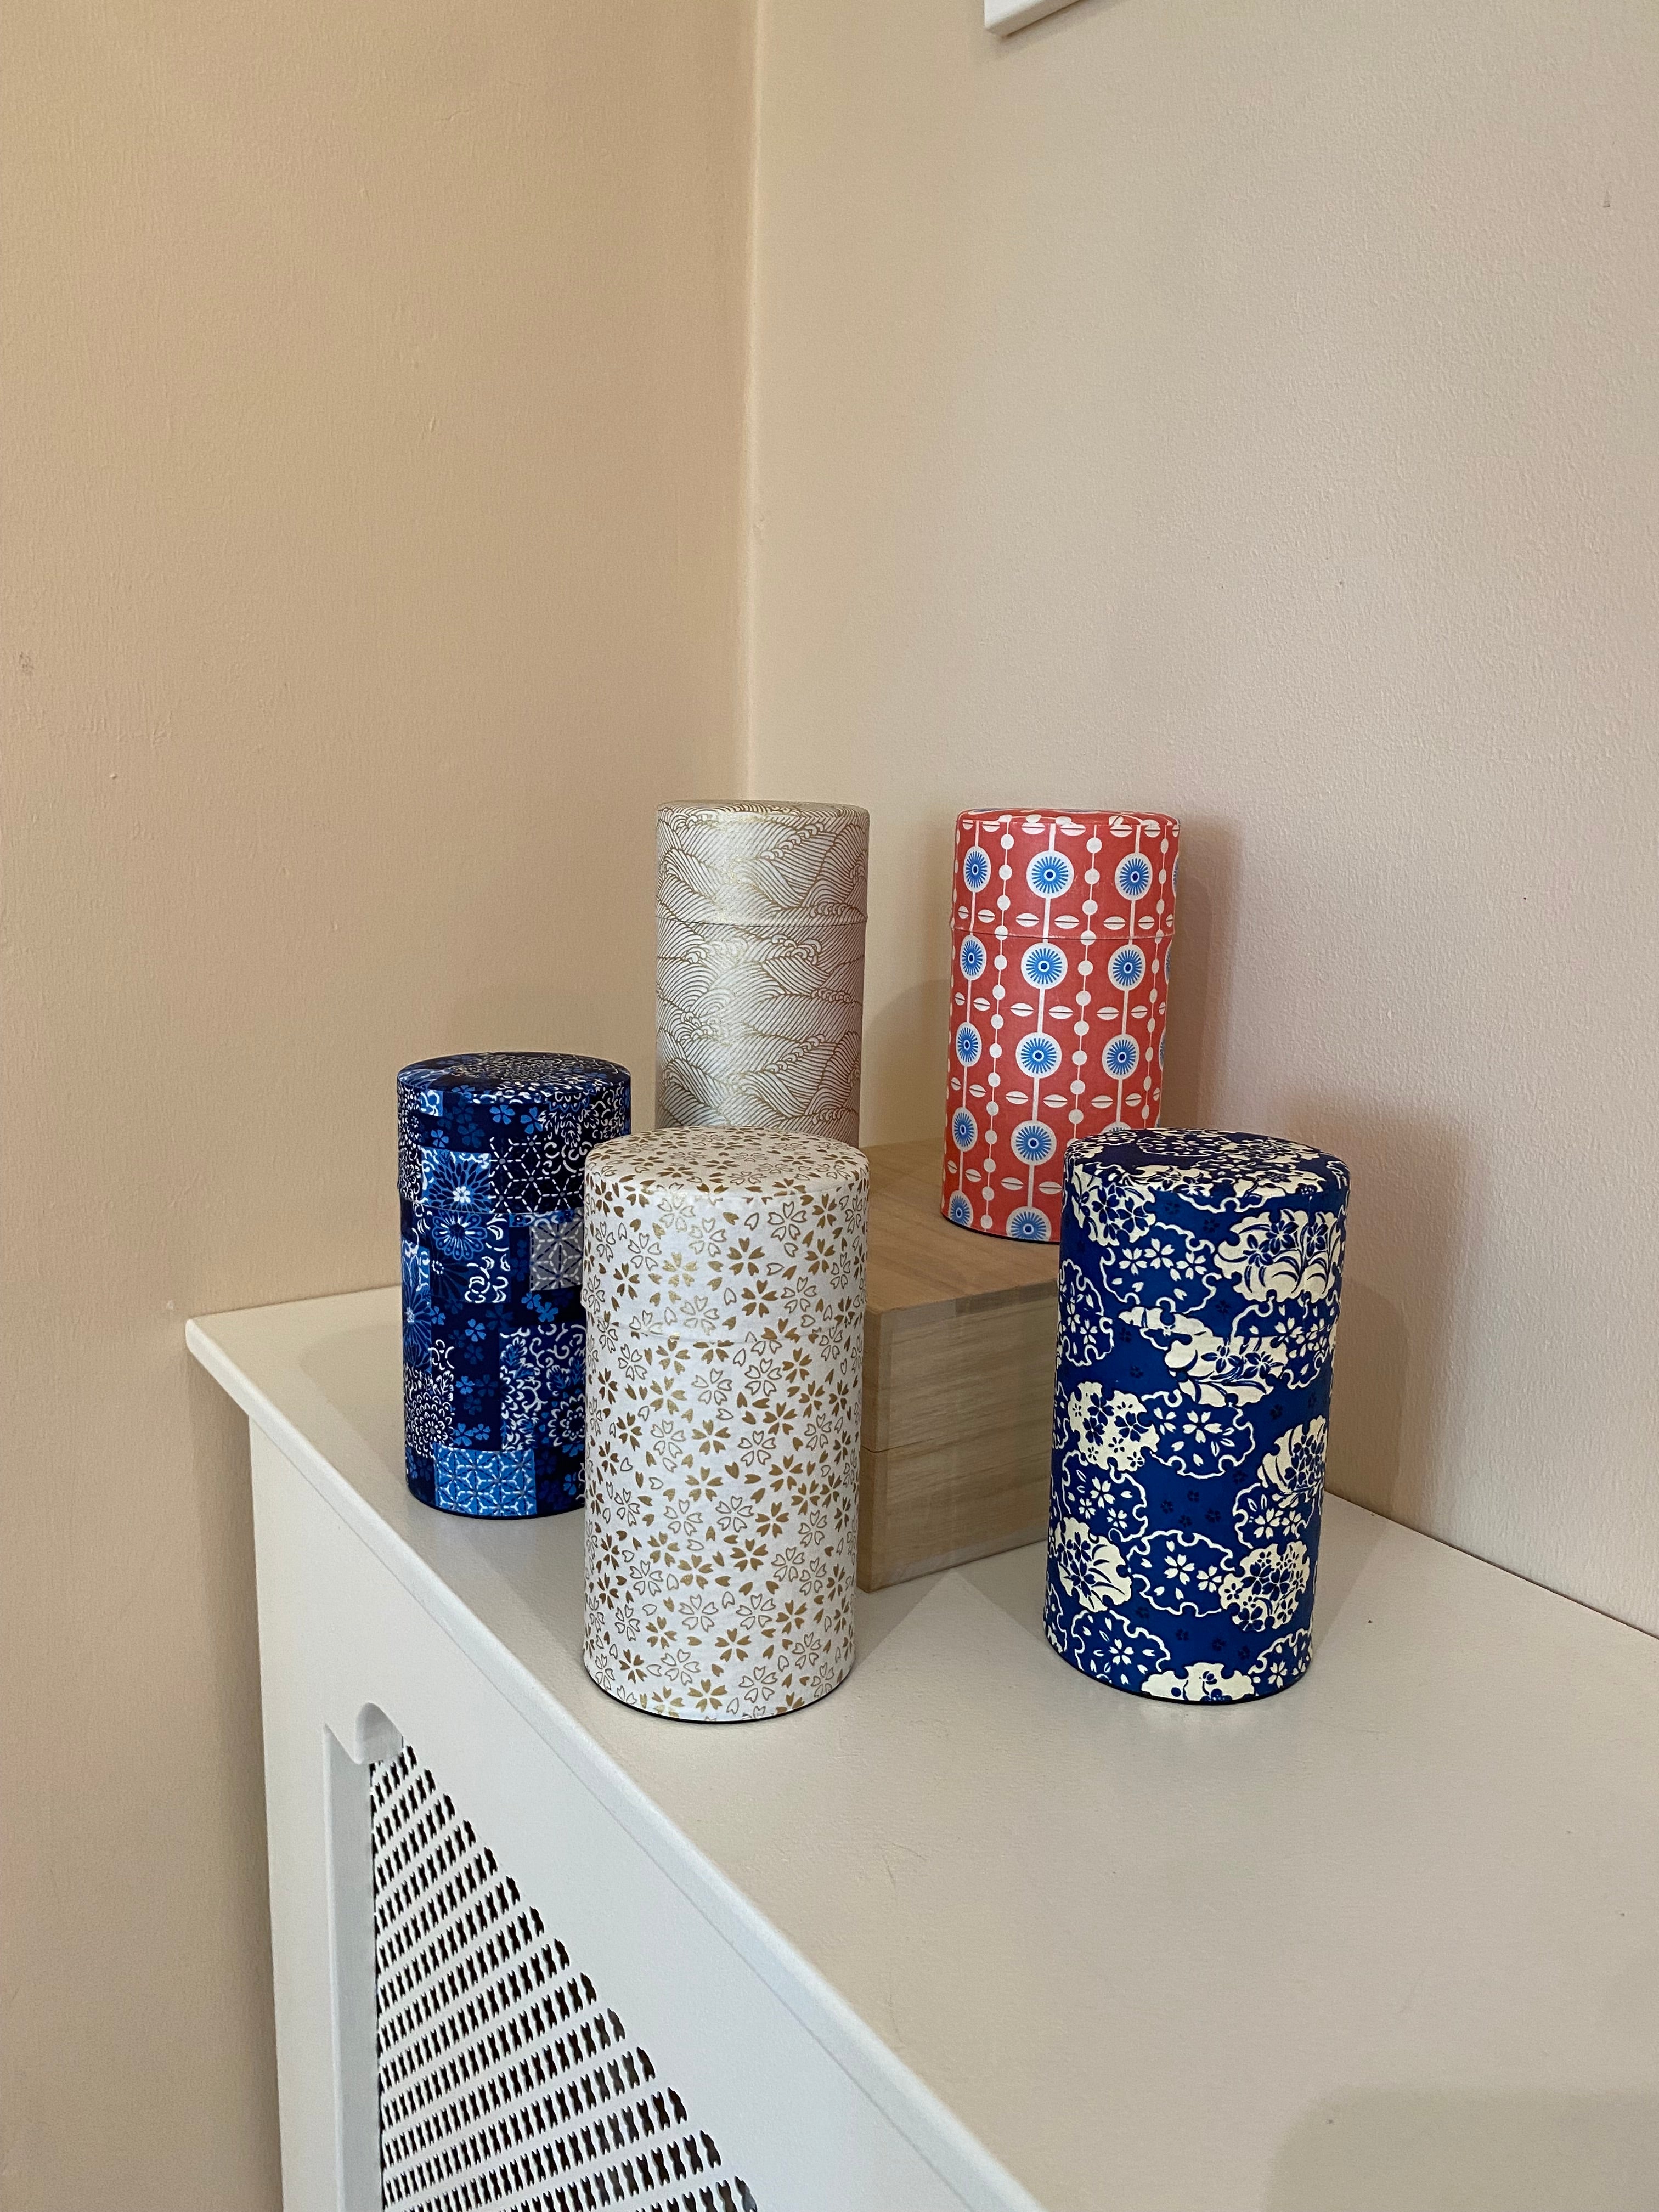 Tea tins in different patterns - tall